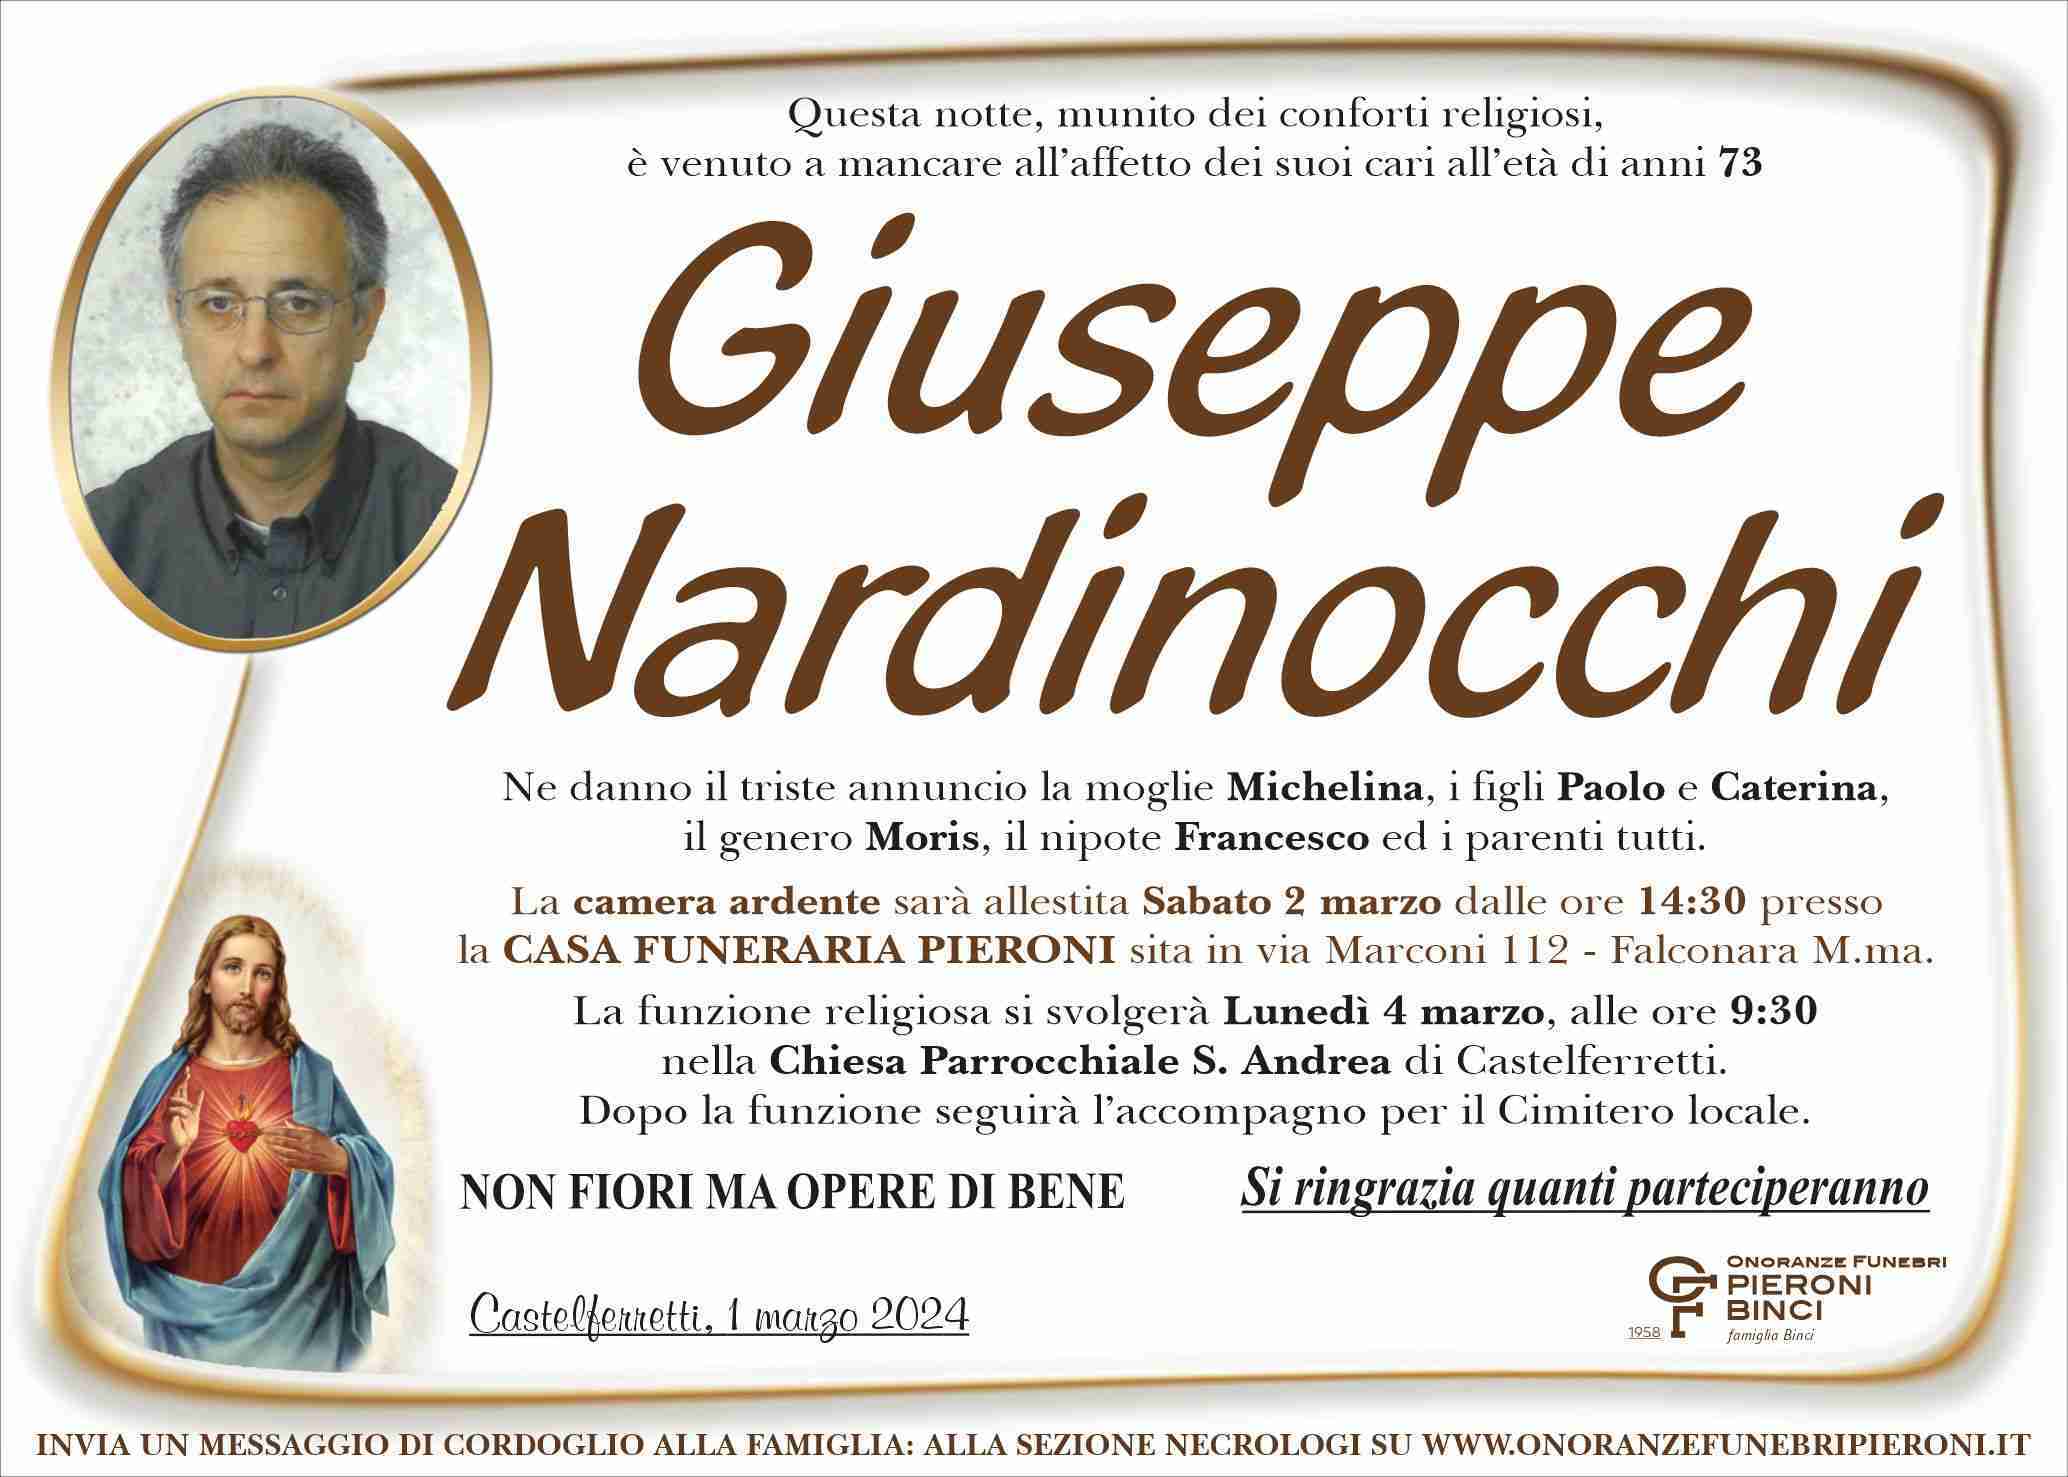 Giuseppe Nardinocchi